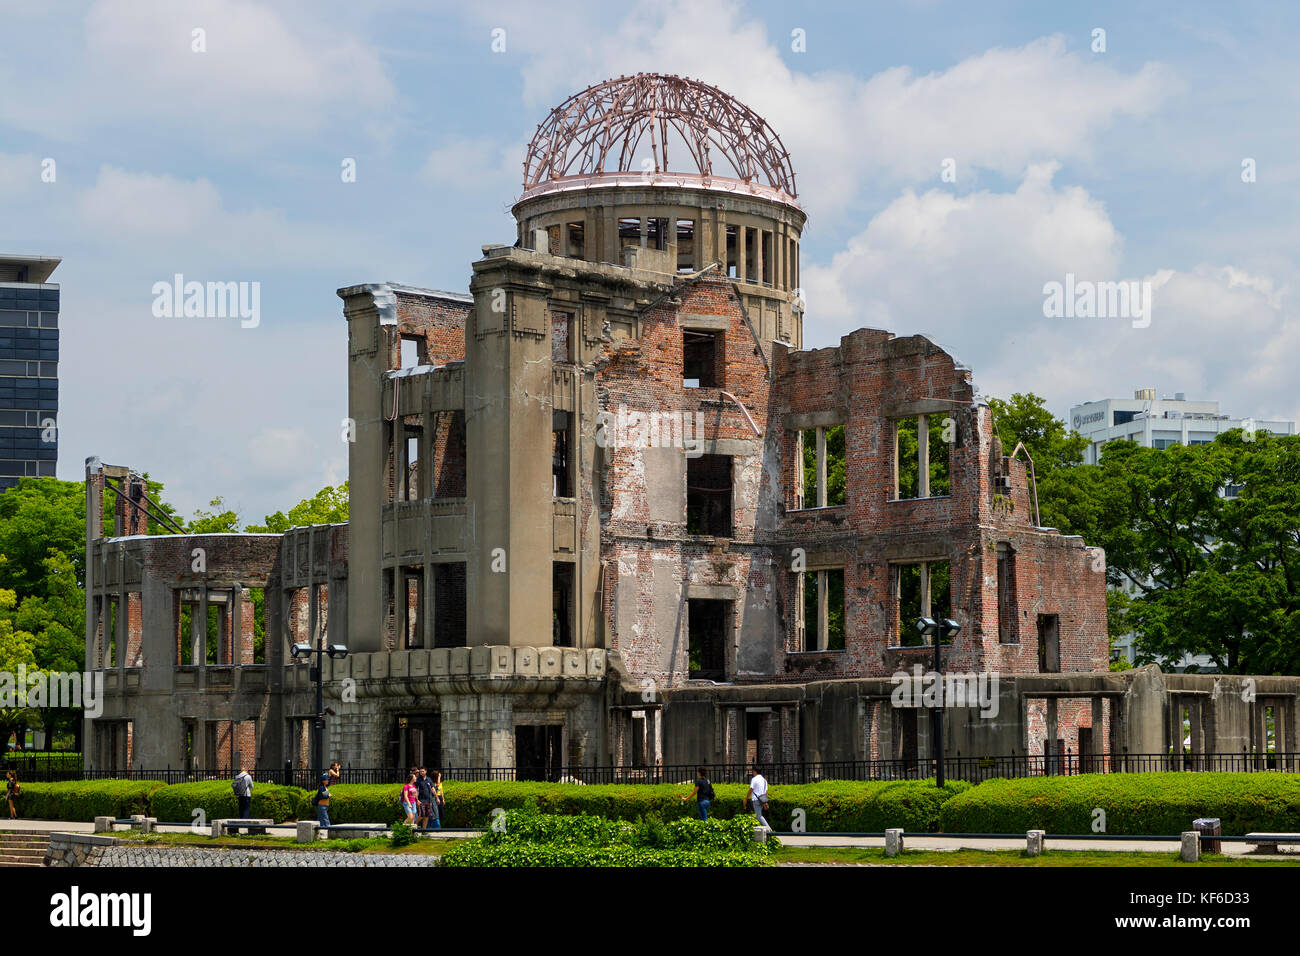 Hiroshima, Japan - 25. Mai 2017: die Ruinen der ehemaligen Präfektur Hiroshima Industrial Promotion Halle, die a-Bombe Kuppel Stockfoto